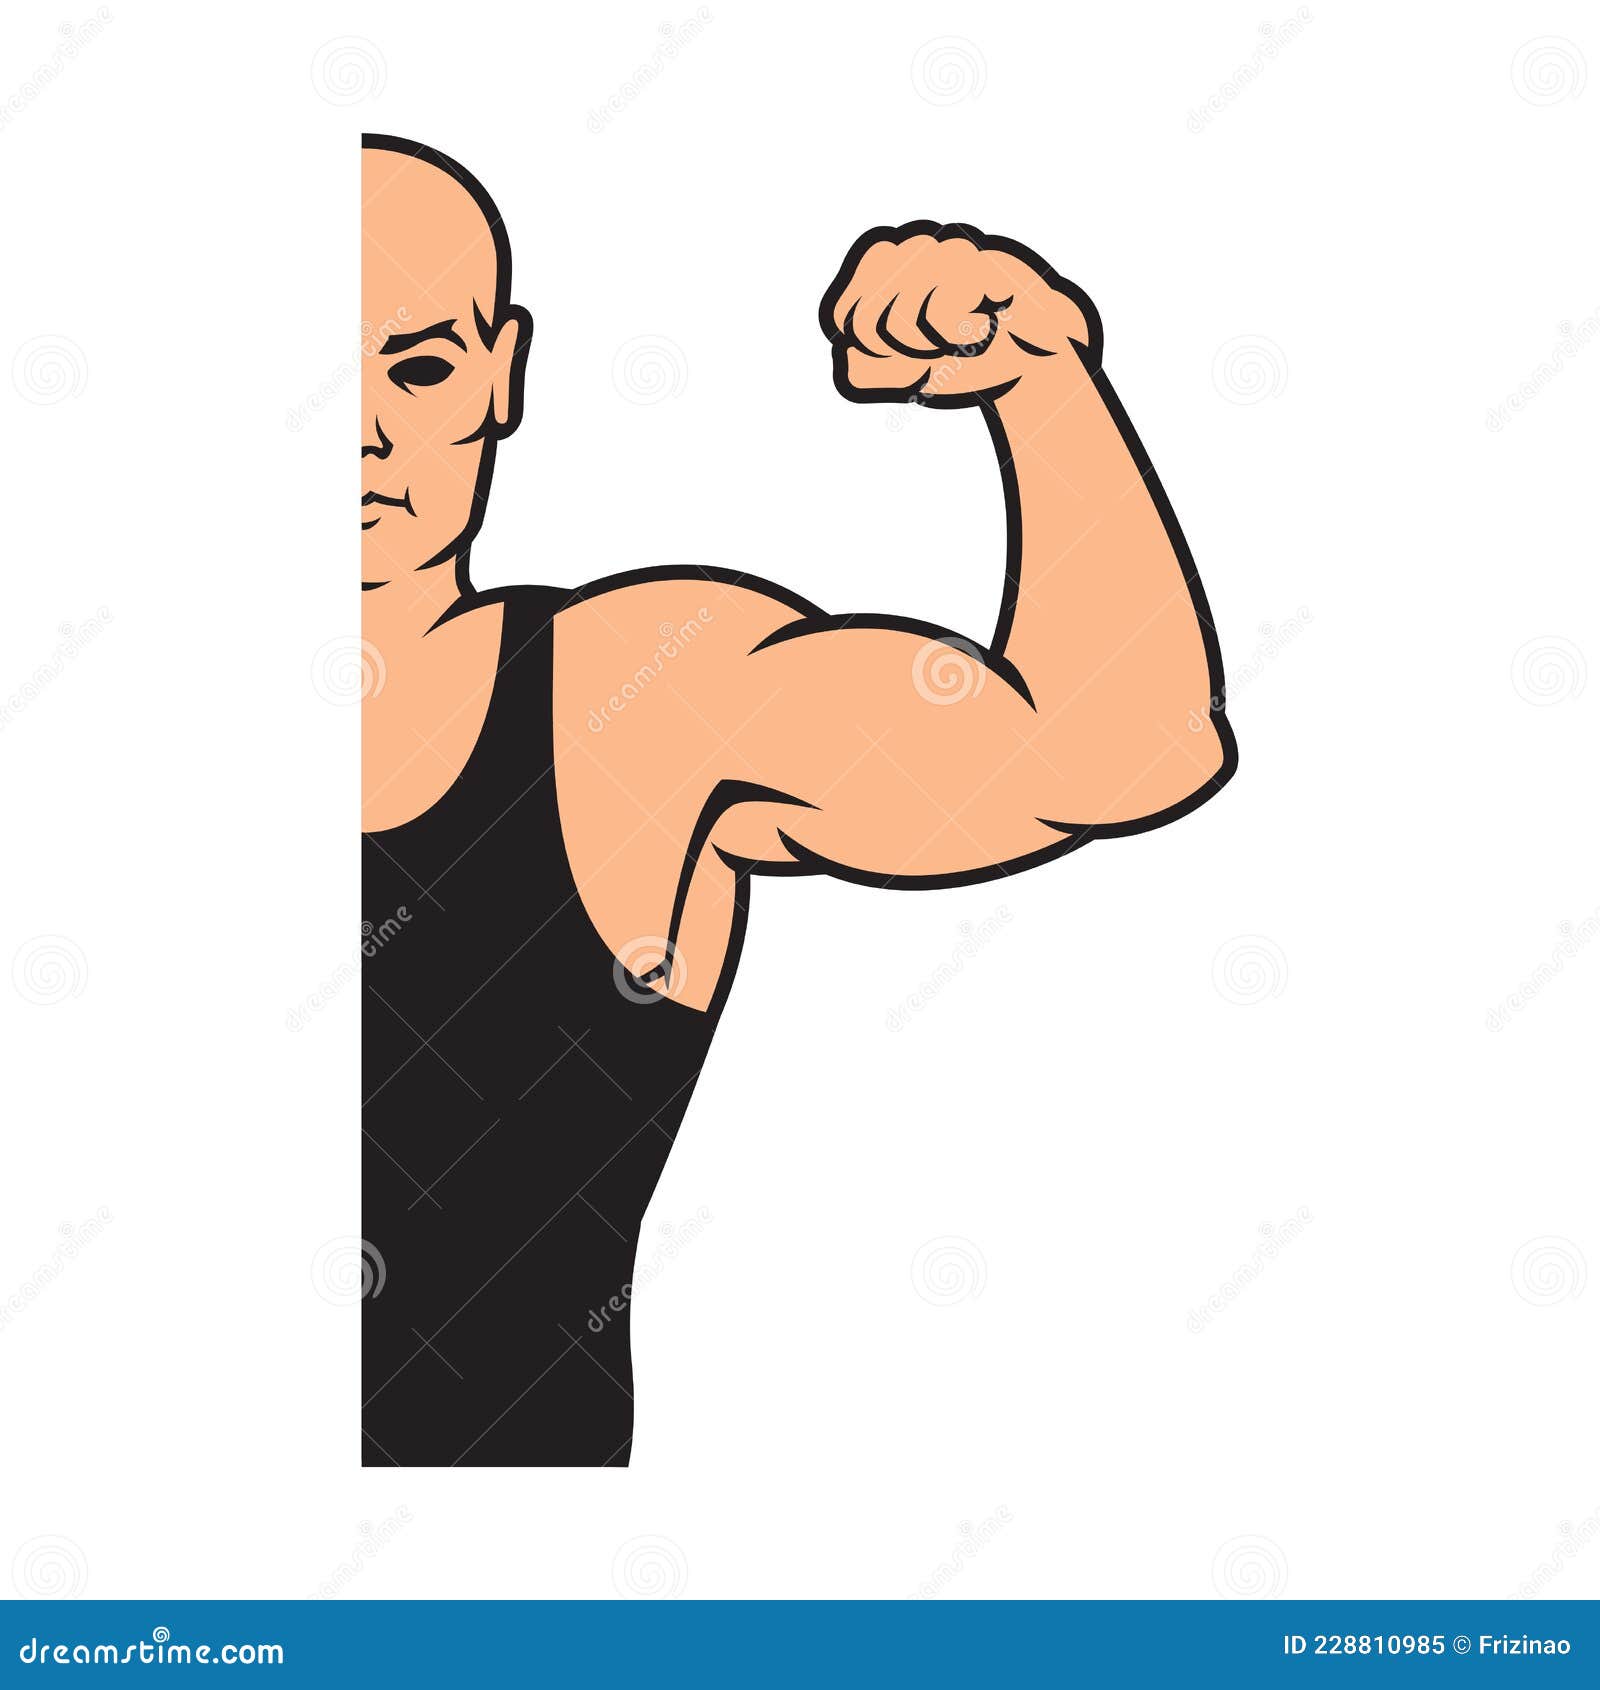 Bodybuilder Strong Man. Design Element. Vector Illustration Isolated on  White Background Stock Vector - Illustration of design, fitness: 228810985